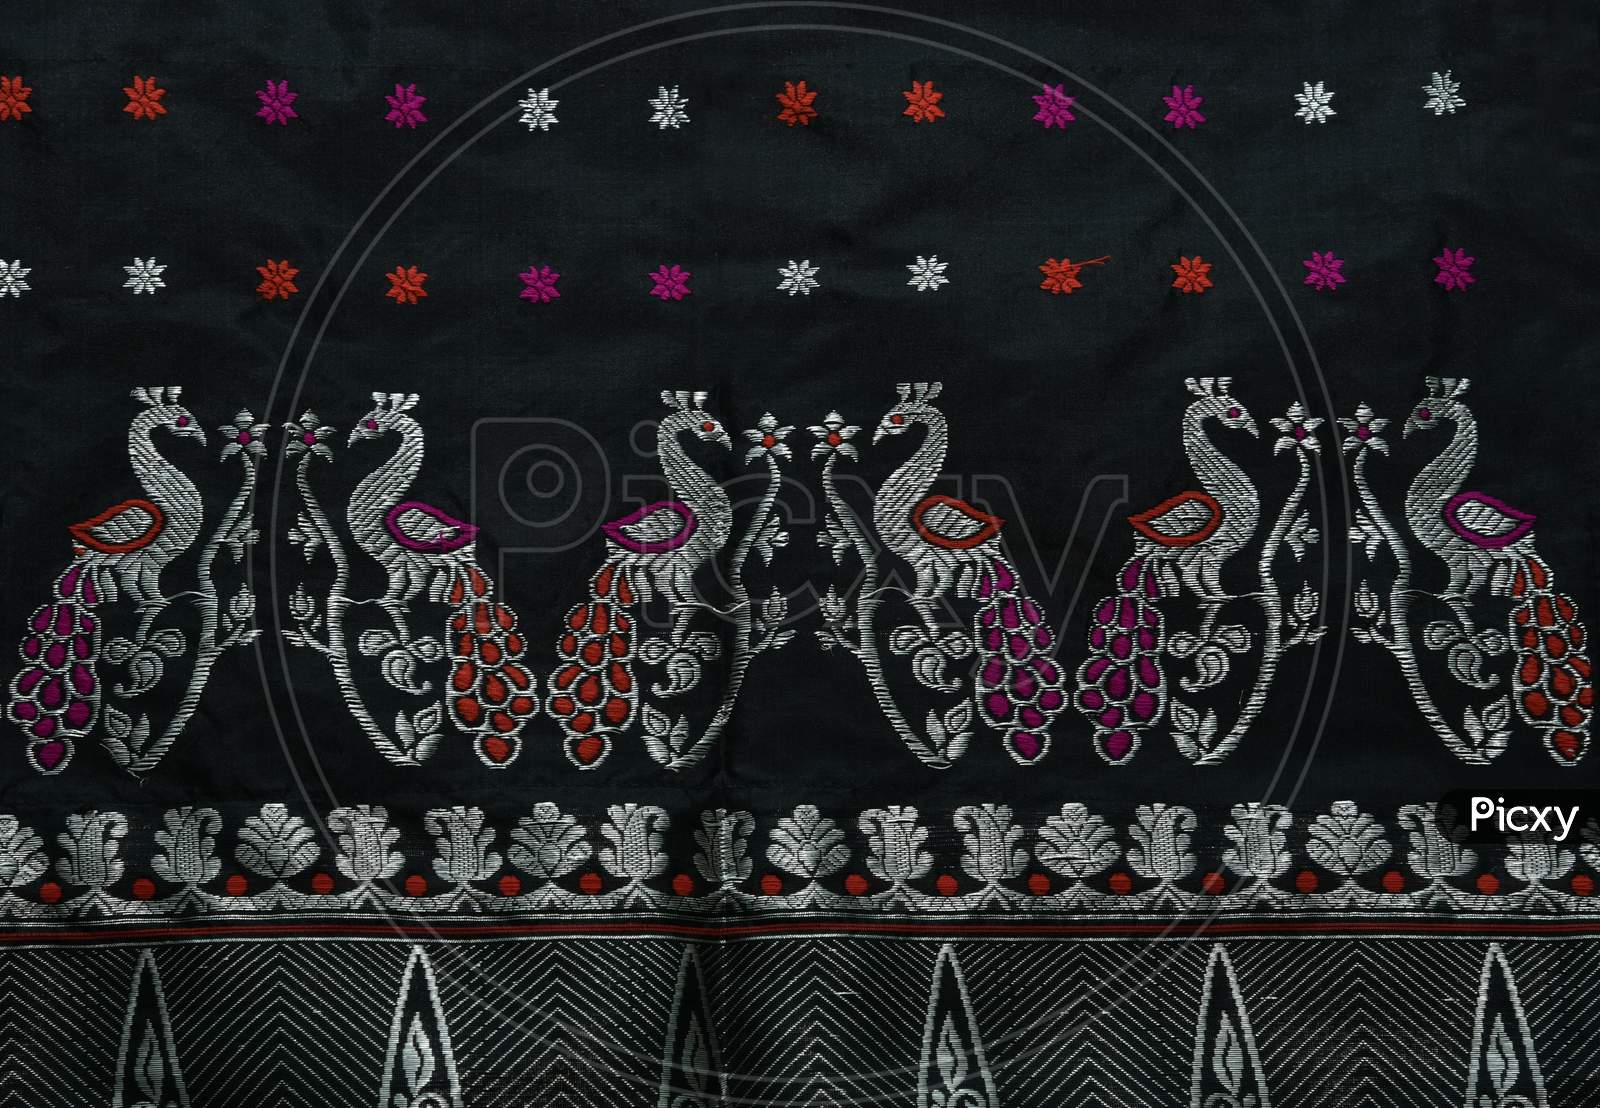 Handmade Handloom Sarees With Elegant Designs At Weavers Stores in Guwahati